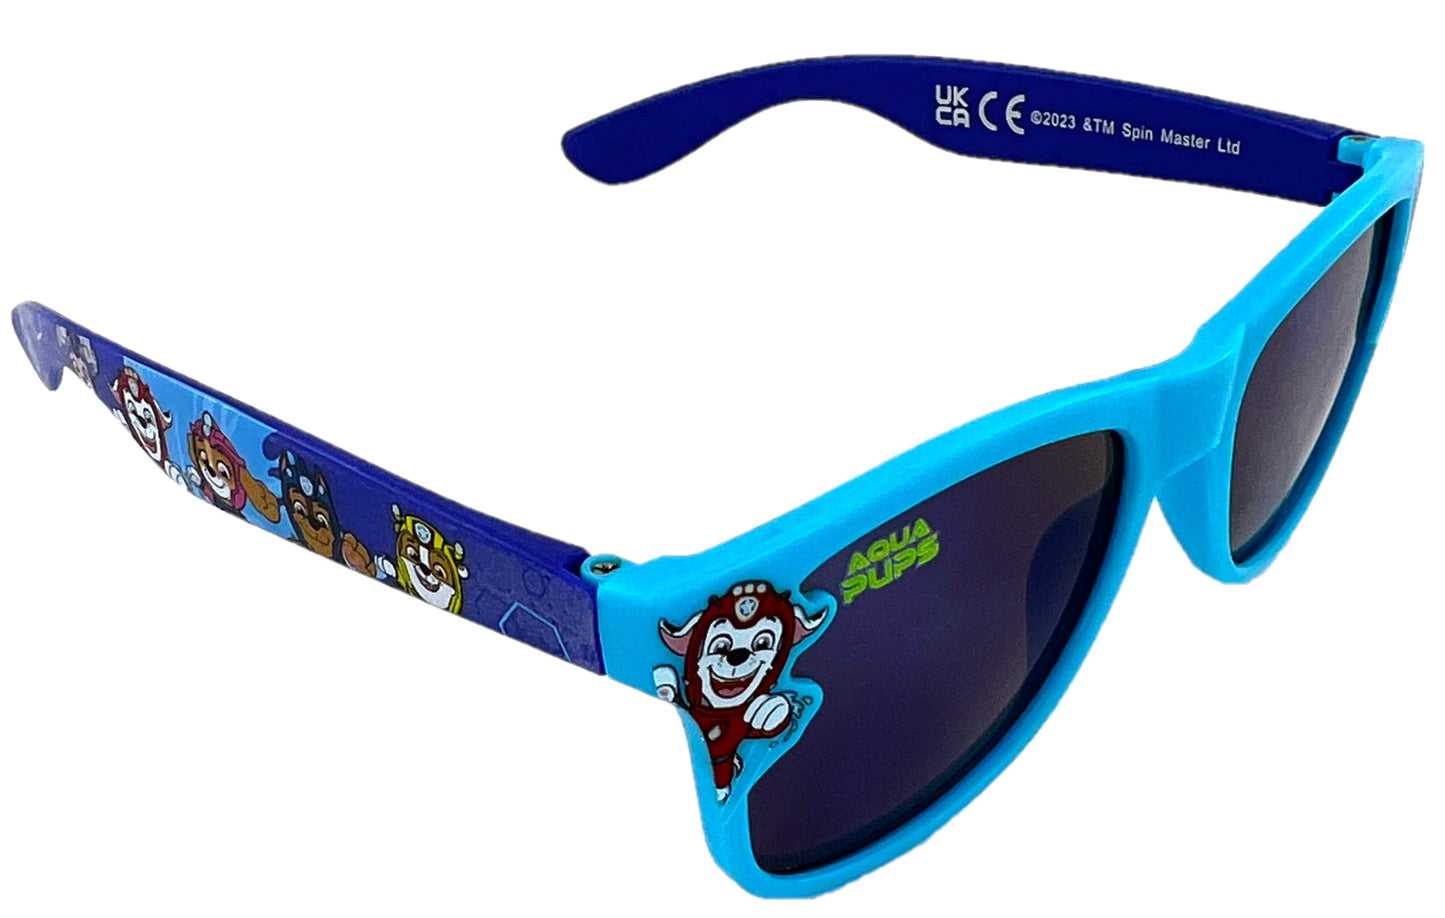 Paw Patrol Children's Sunglasses & Baseball Cap Summer Set 100% UV Protection